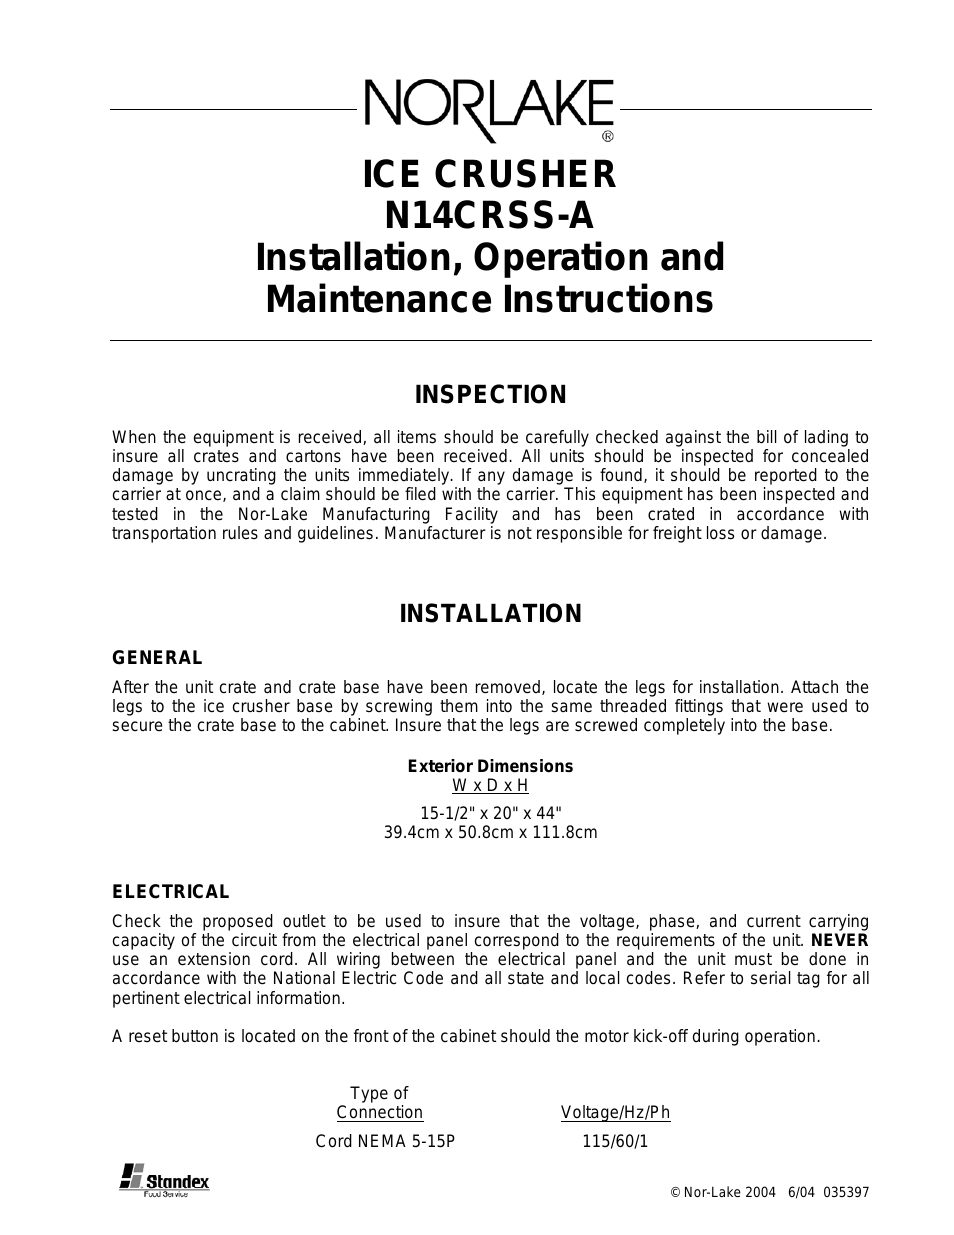 ICE CRUSHER N14CRSS-A